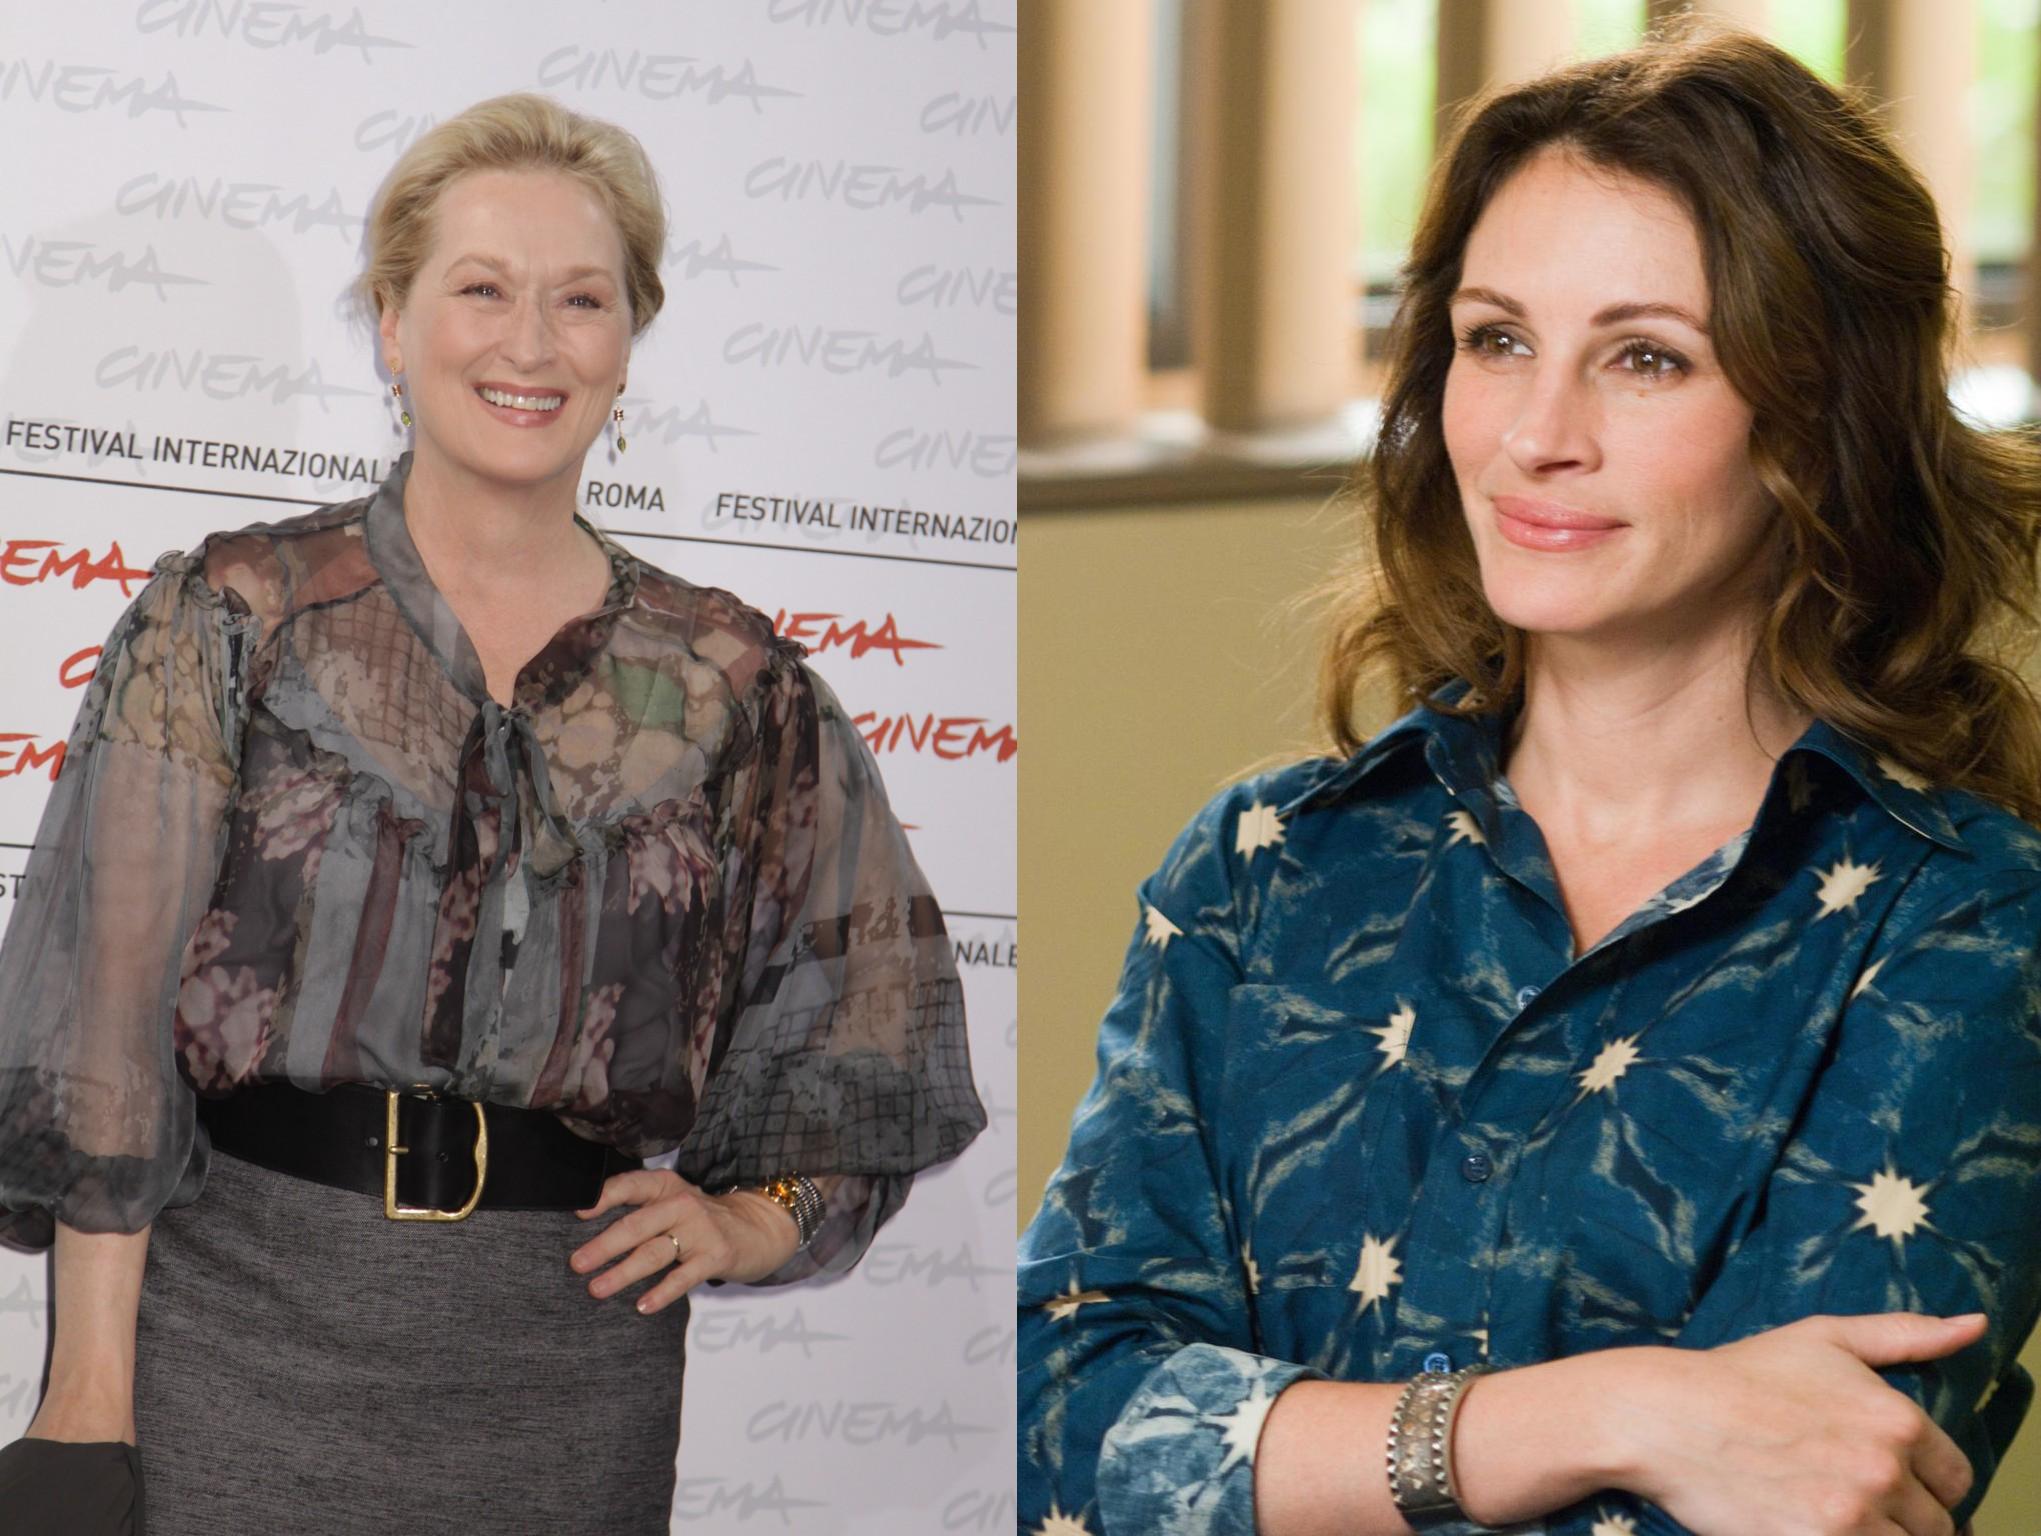 Ça sent l'embrouille entre Meryl Streep et Julia Roberts